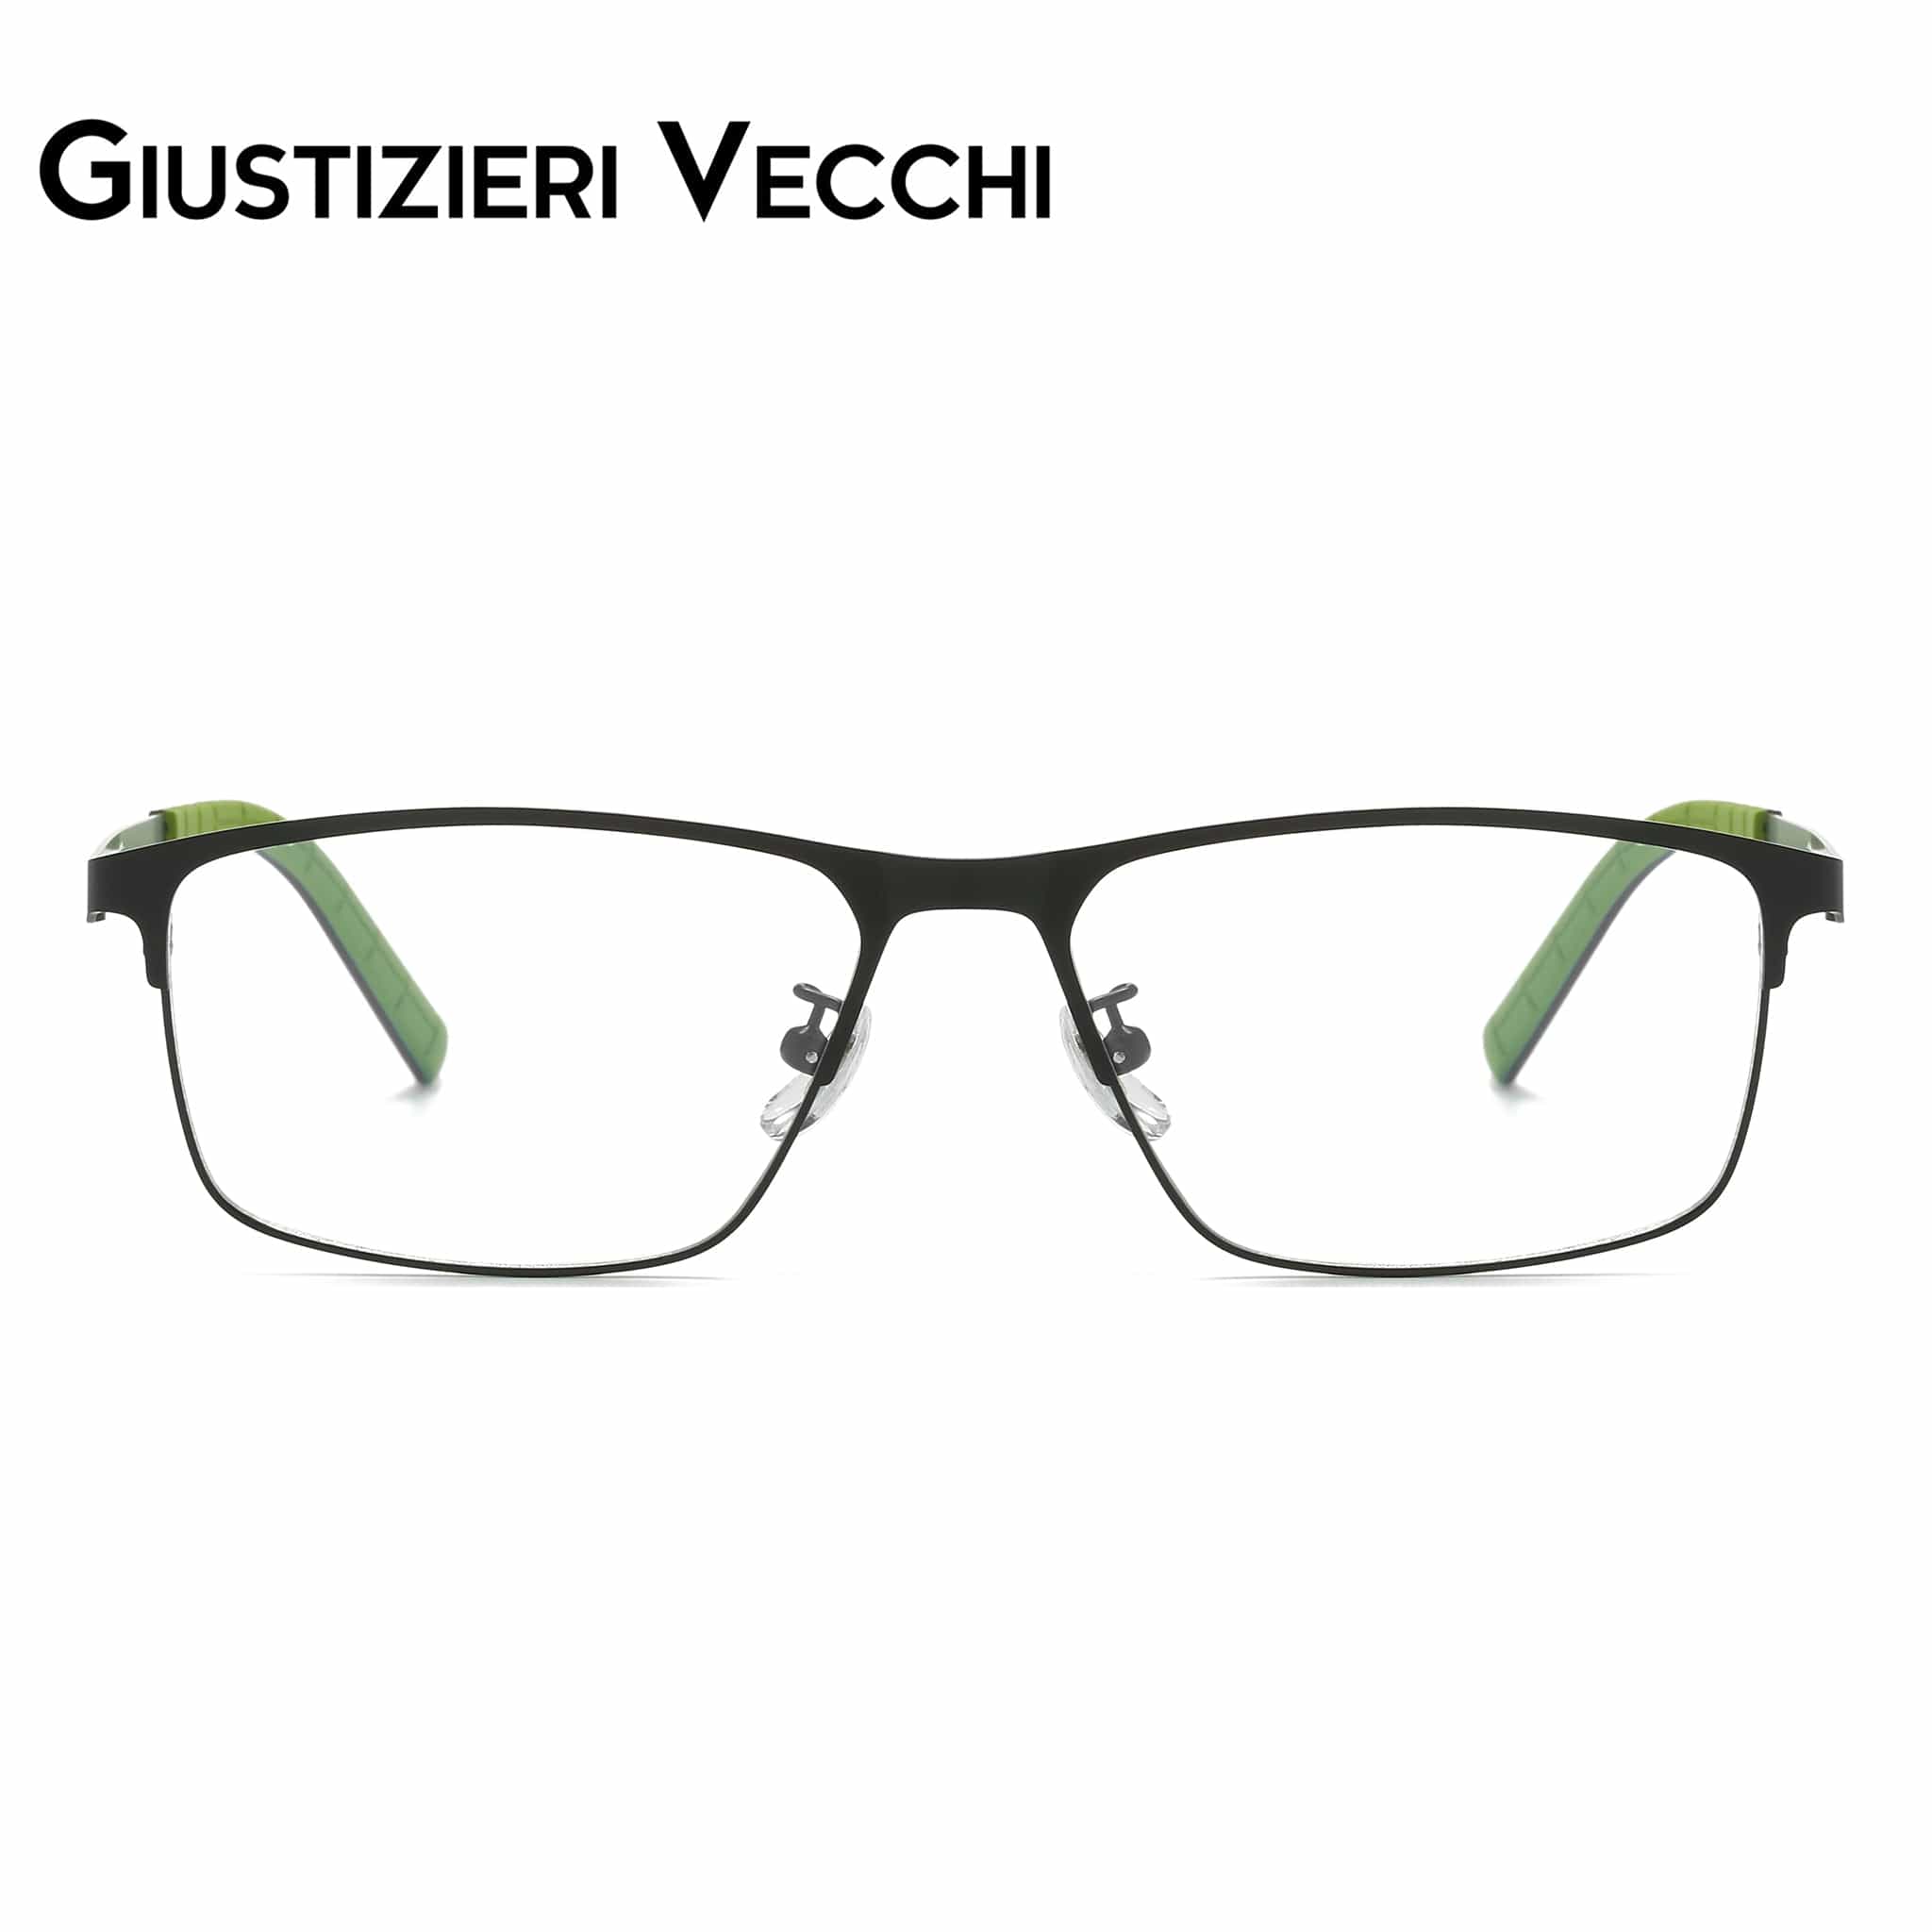 GIUSTIZIERI VECCHI Eyeglasses Large / Grey with Green Sunburst Tre